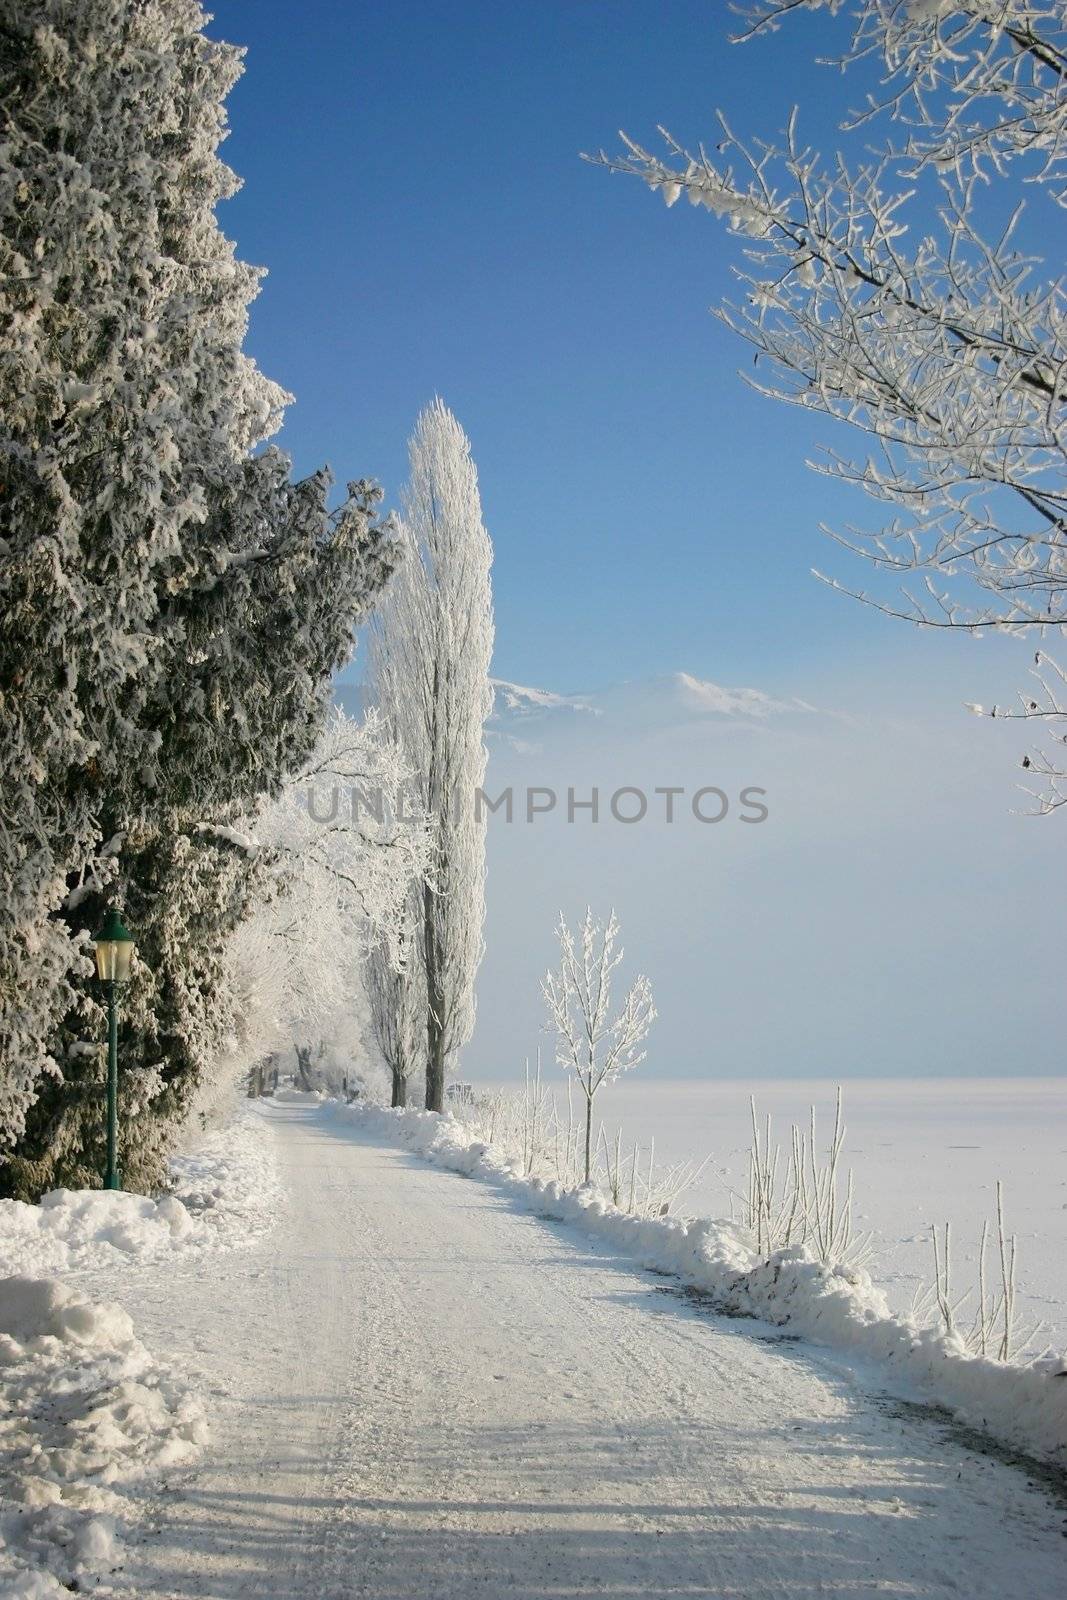 Frozen winter road near the Zell am See lake in Austria